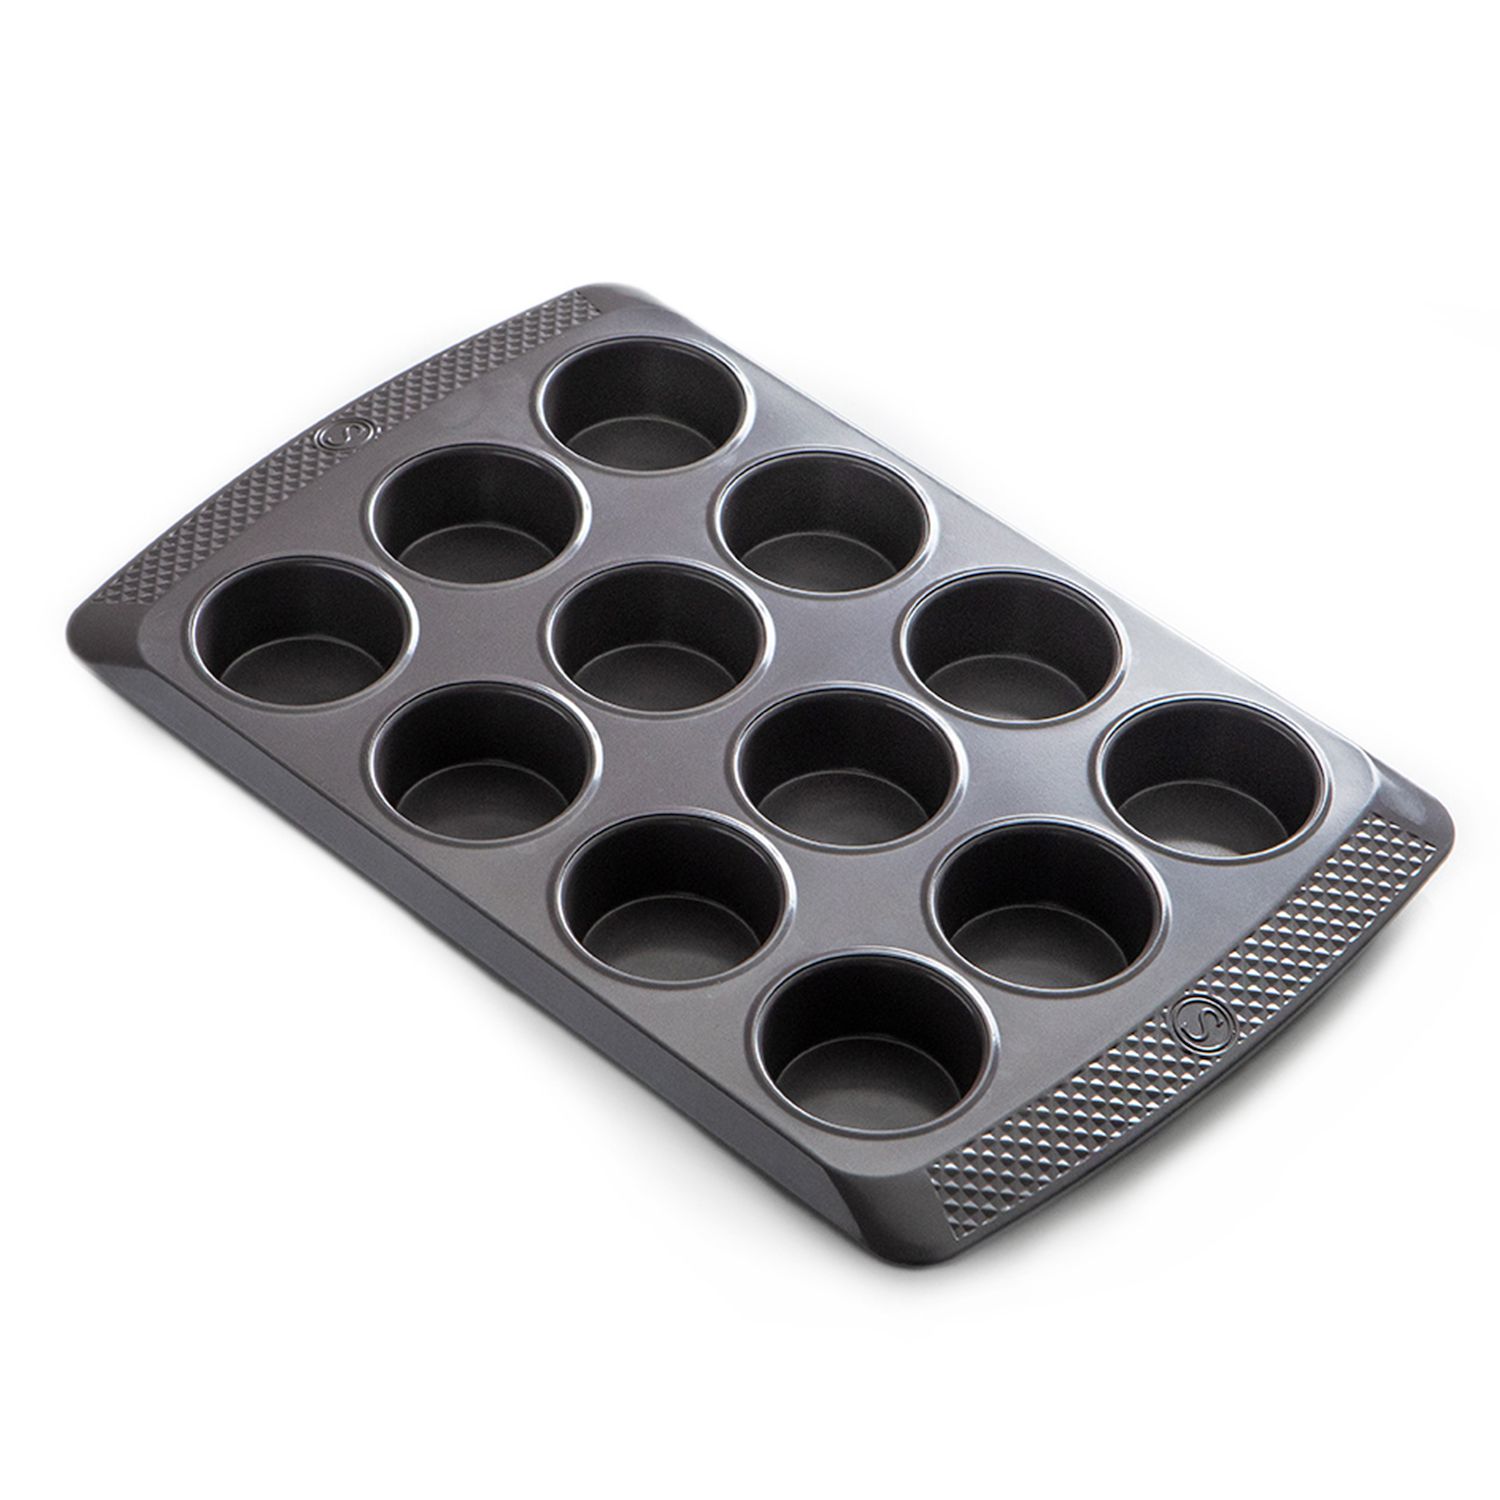 KitchenAid Nonstick Aluminized Steel Muffin Pan, 12-Cup, Silver